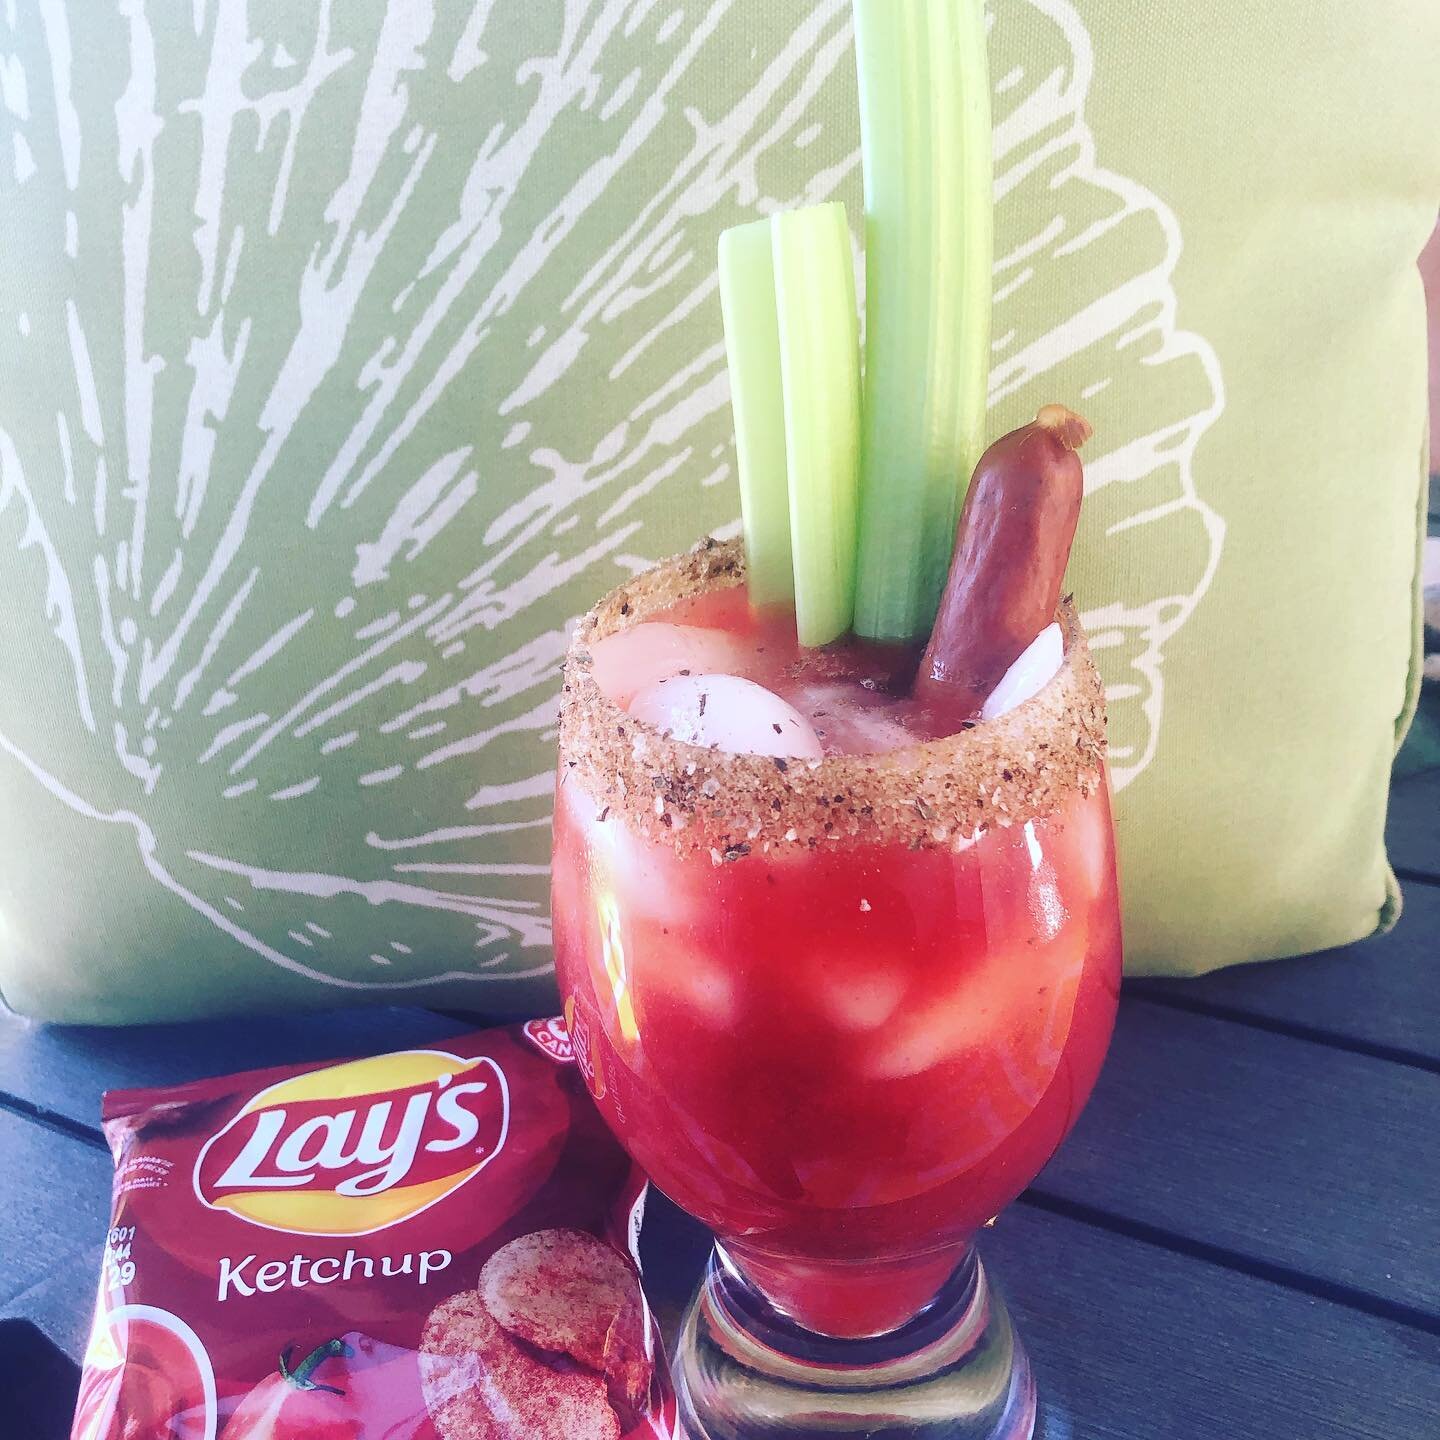 Canadian summer treats.
#hotdays #caesarsunday #mottsclamato #ketchupchips